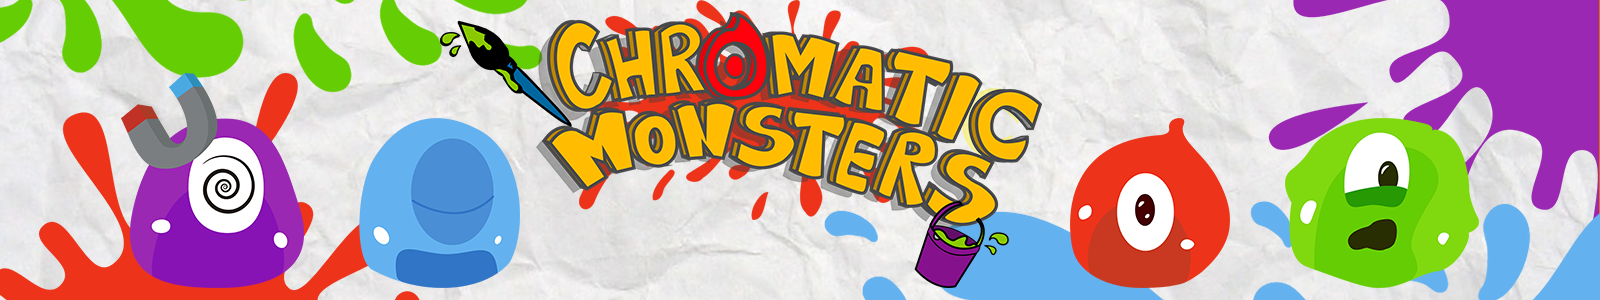 Chromatic Monsters